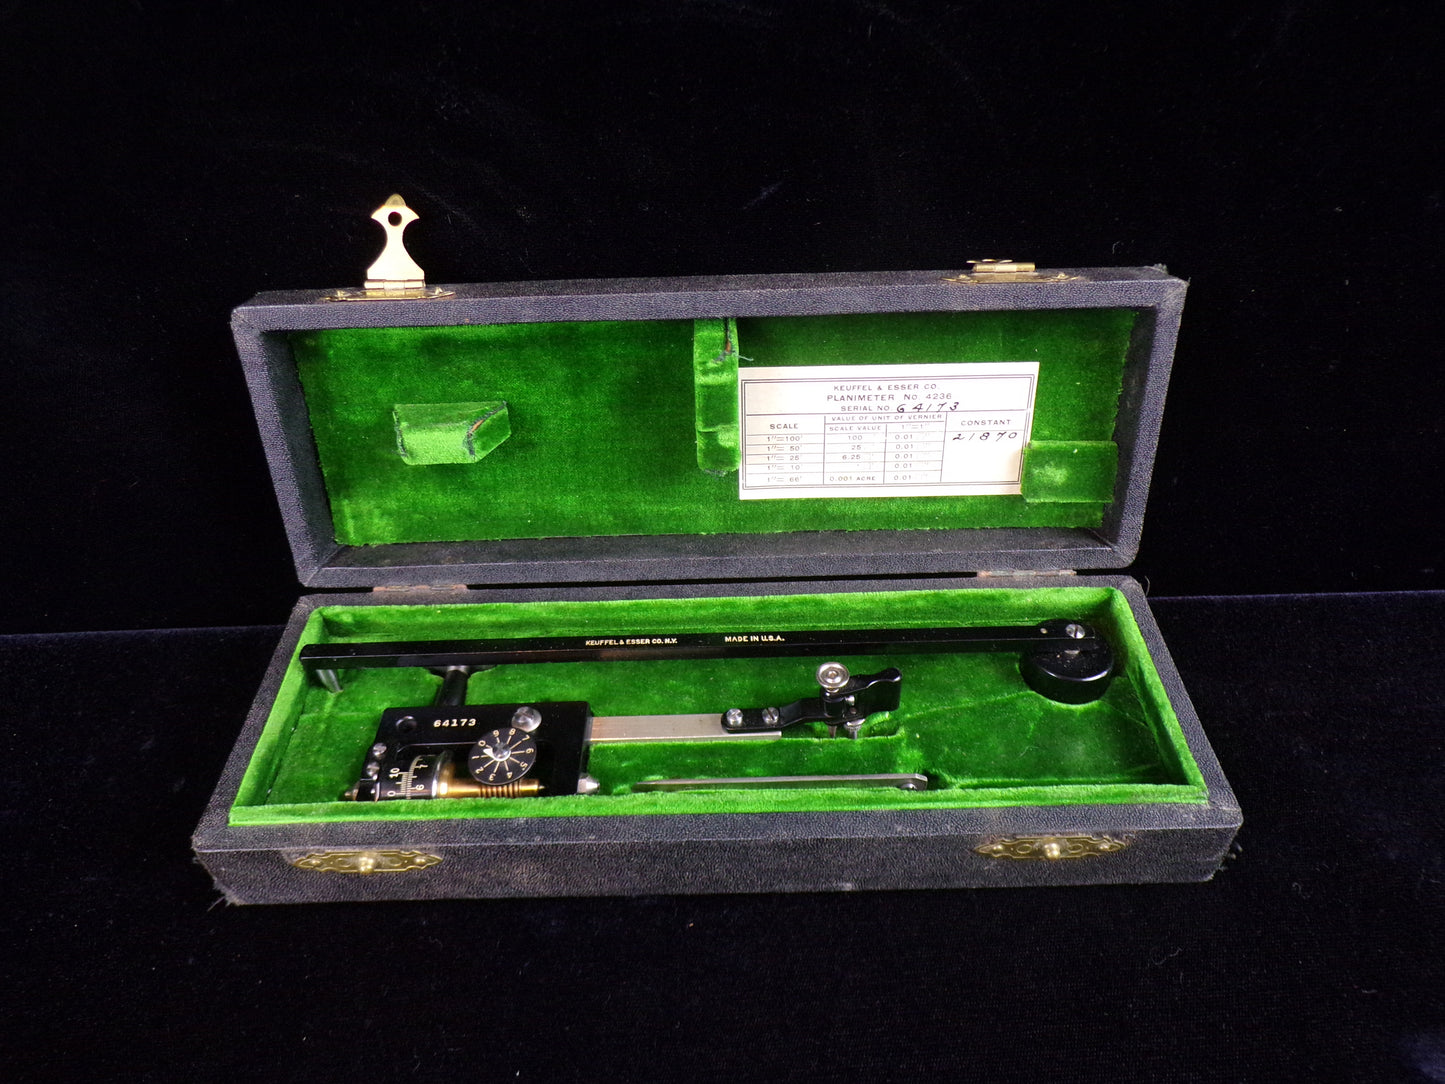 Vintage K&E Keuffel & Esser 4236 Compensating Polar Planimeter, Complete, with Case